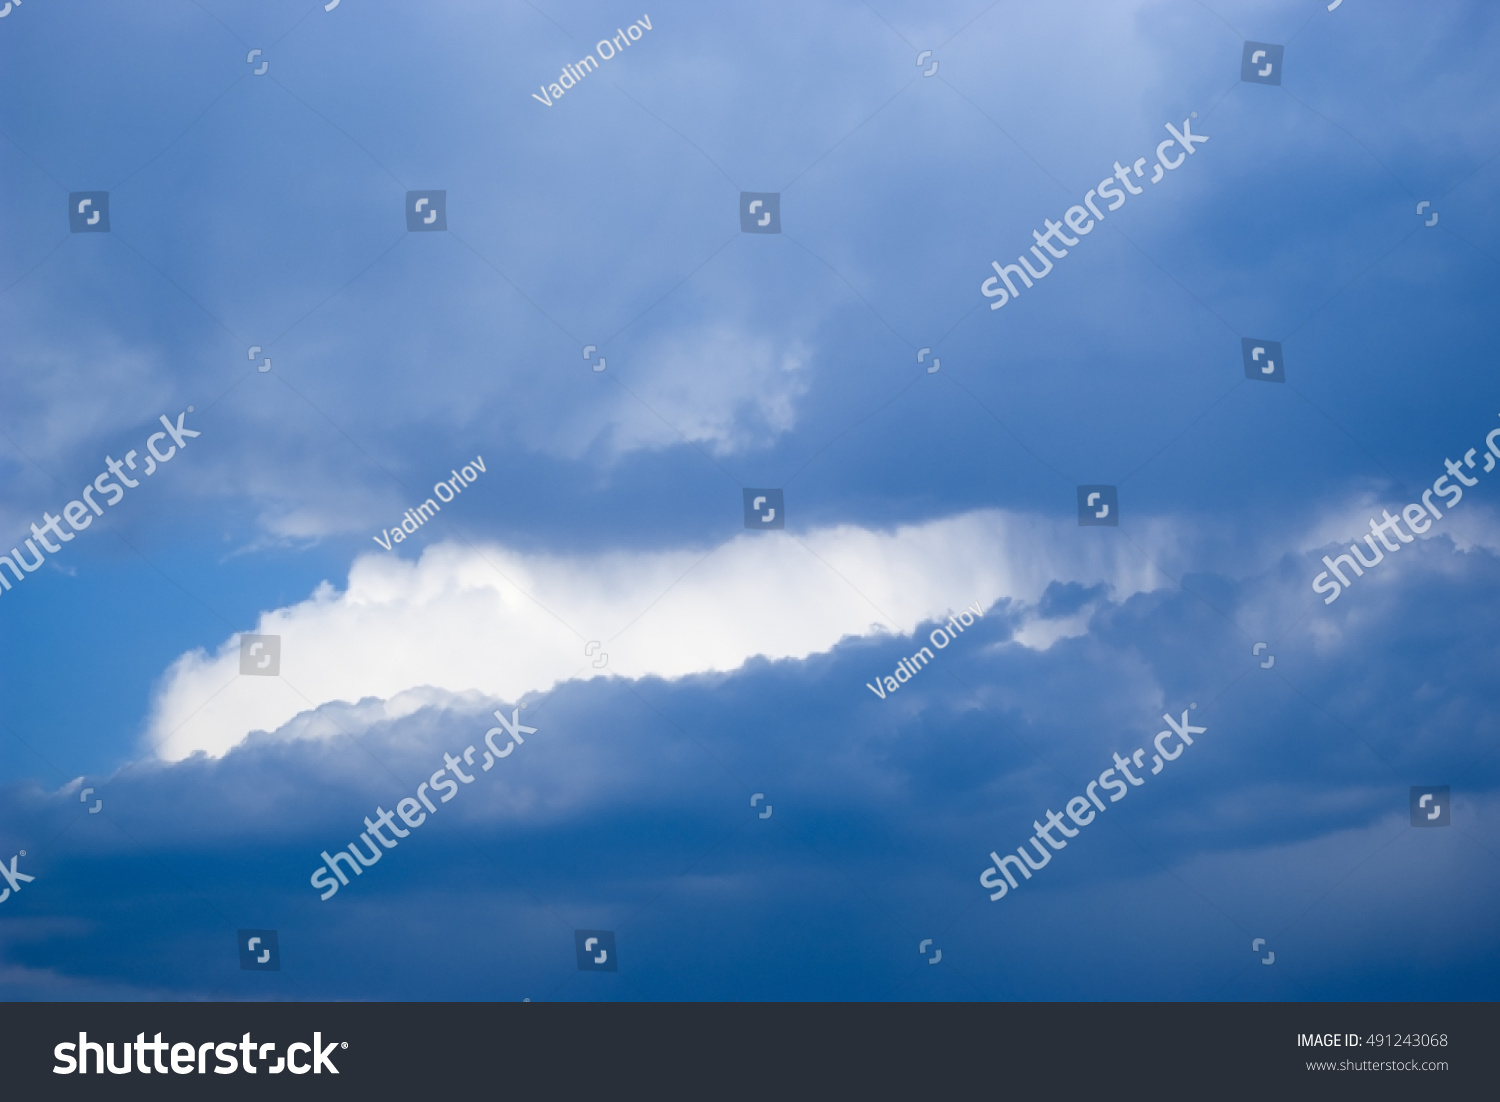 Clouds. Heavenly landscape #491243068